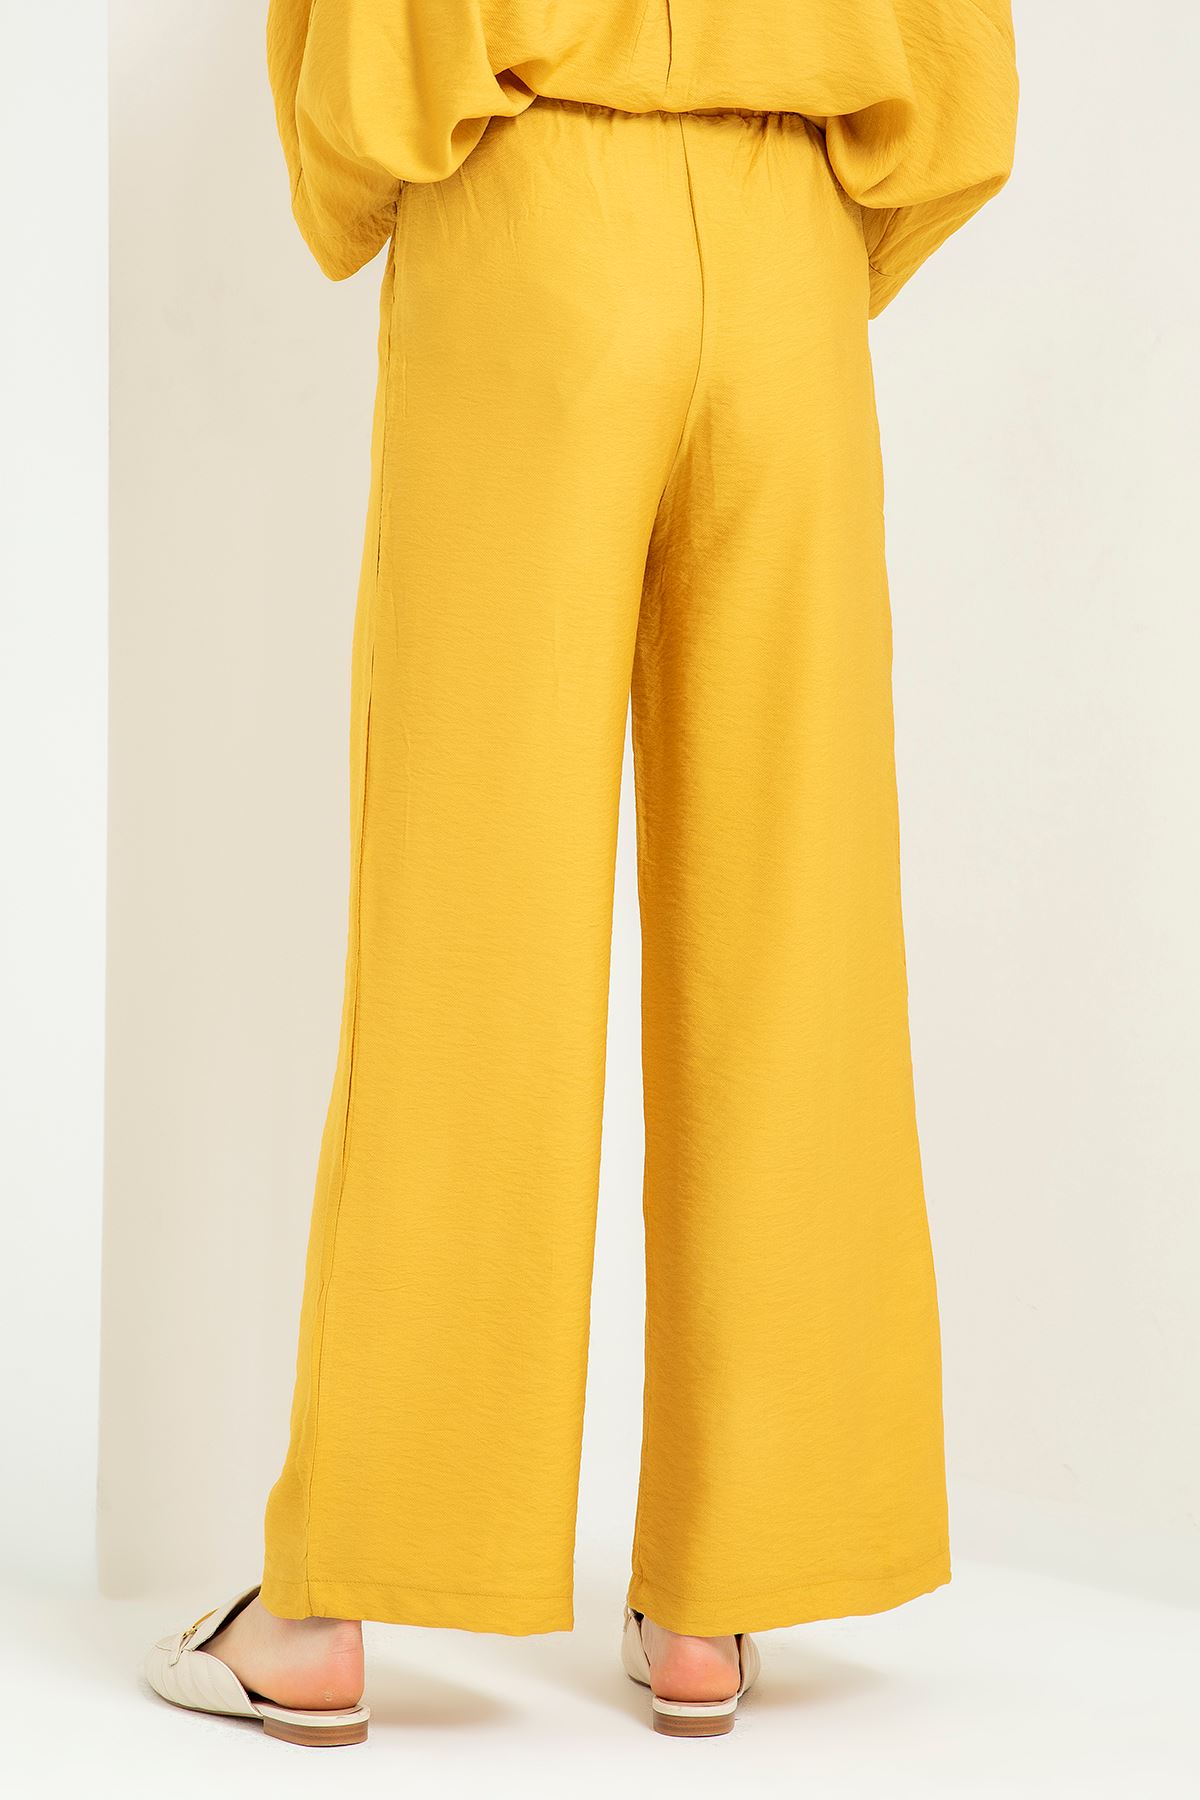 Aerobin Fabric Long Wide Elastic Waist Women'S Trouser - Mustard